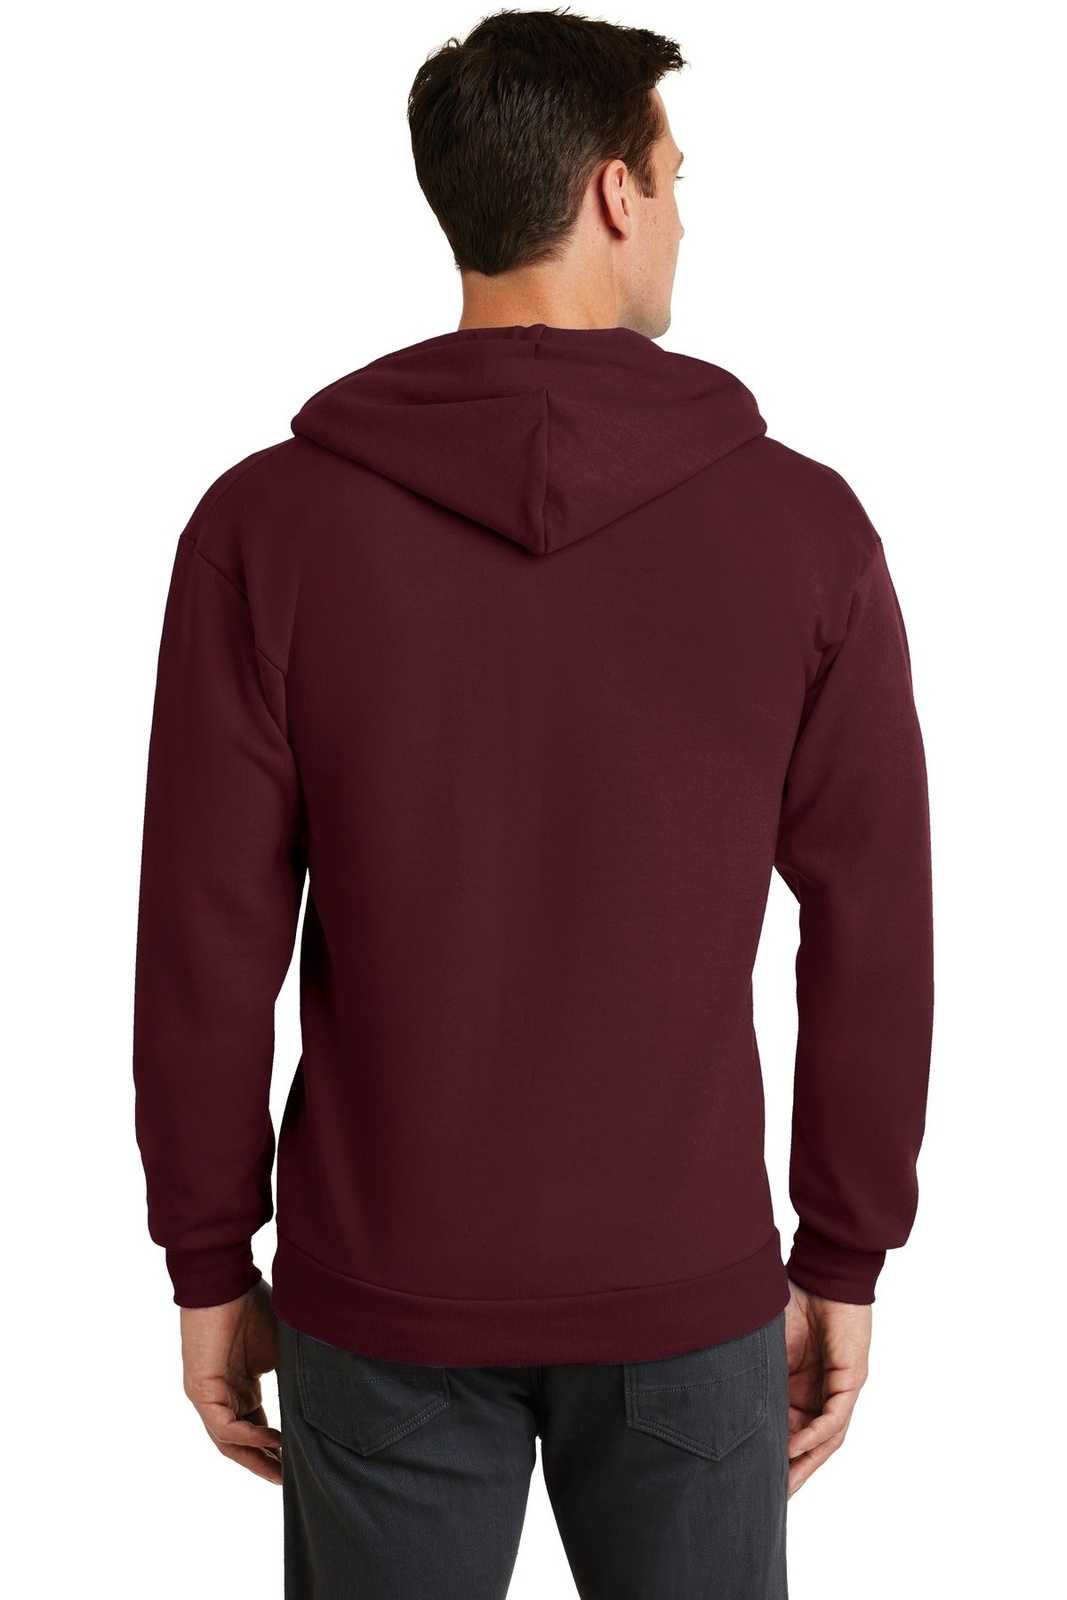 Port &amp; Company PC78ZH Core Fleece Full-Zip Hooded Sweatshirt - Maroon - HIT a Double - 2